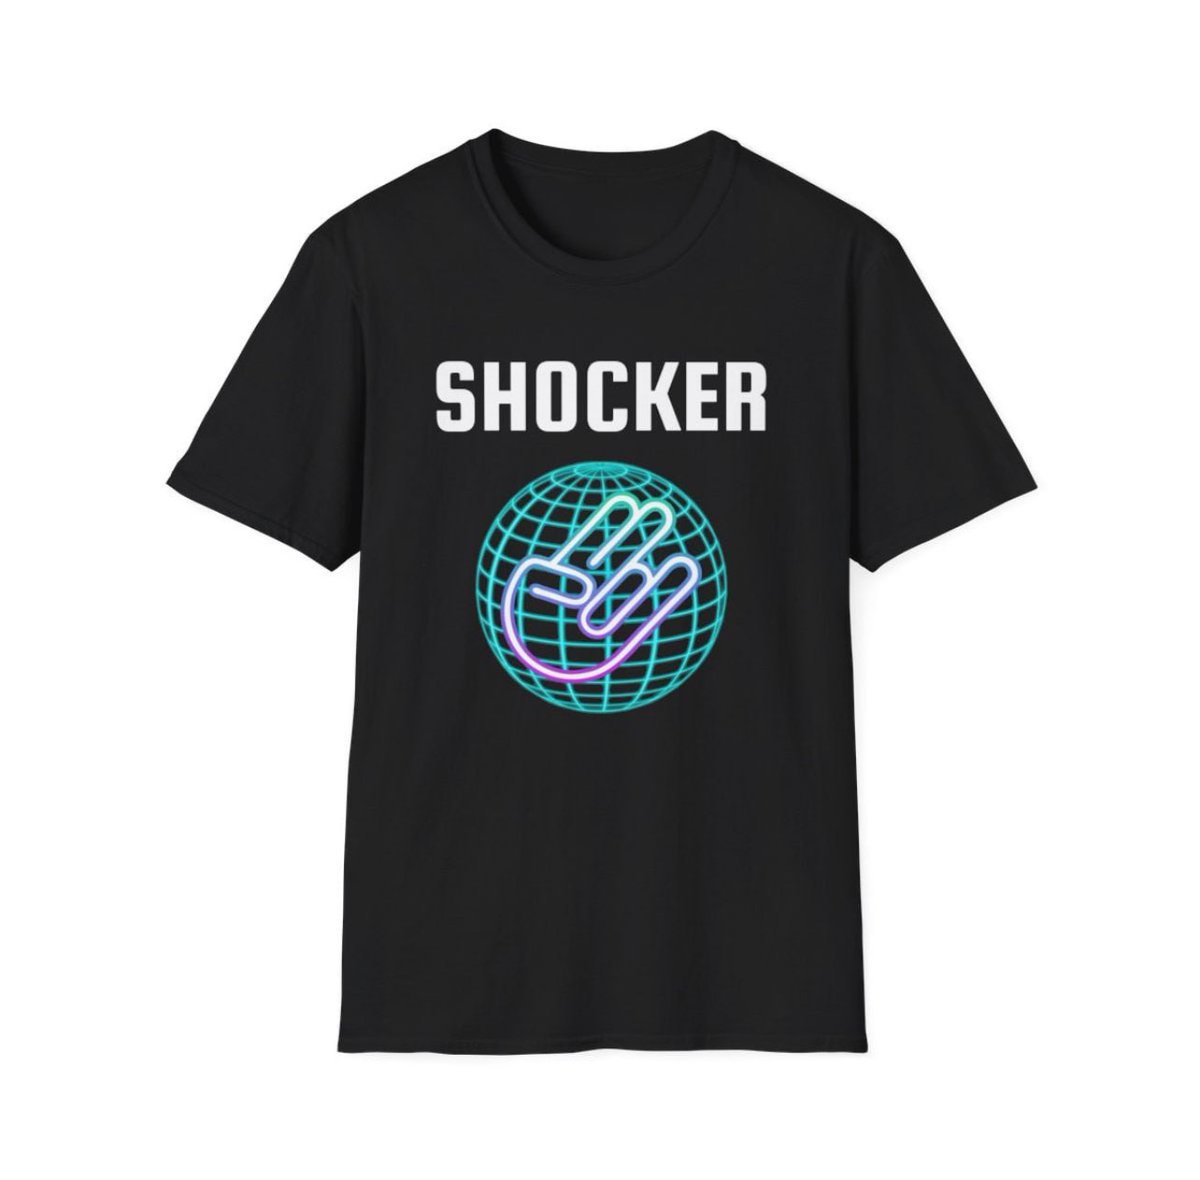 Shocker Merch now available at shocker.printify.me/products

Grab some while supplies last! 

t.me/+MNGNnQ49Ti0zM…

ShockerOnSol.com

x.com/shockeronsol